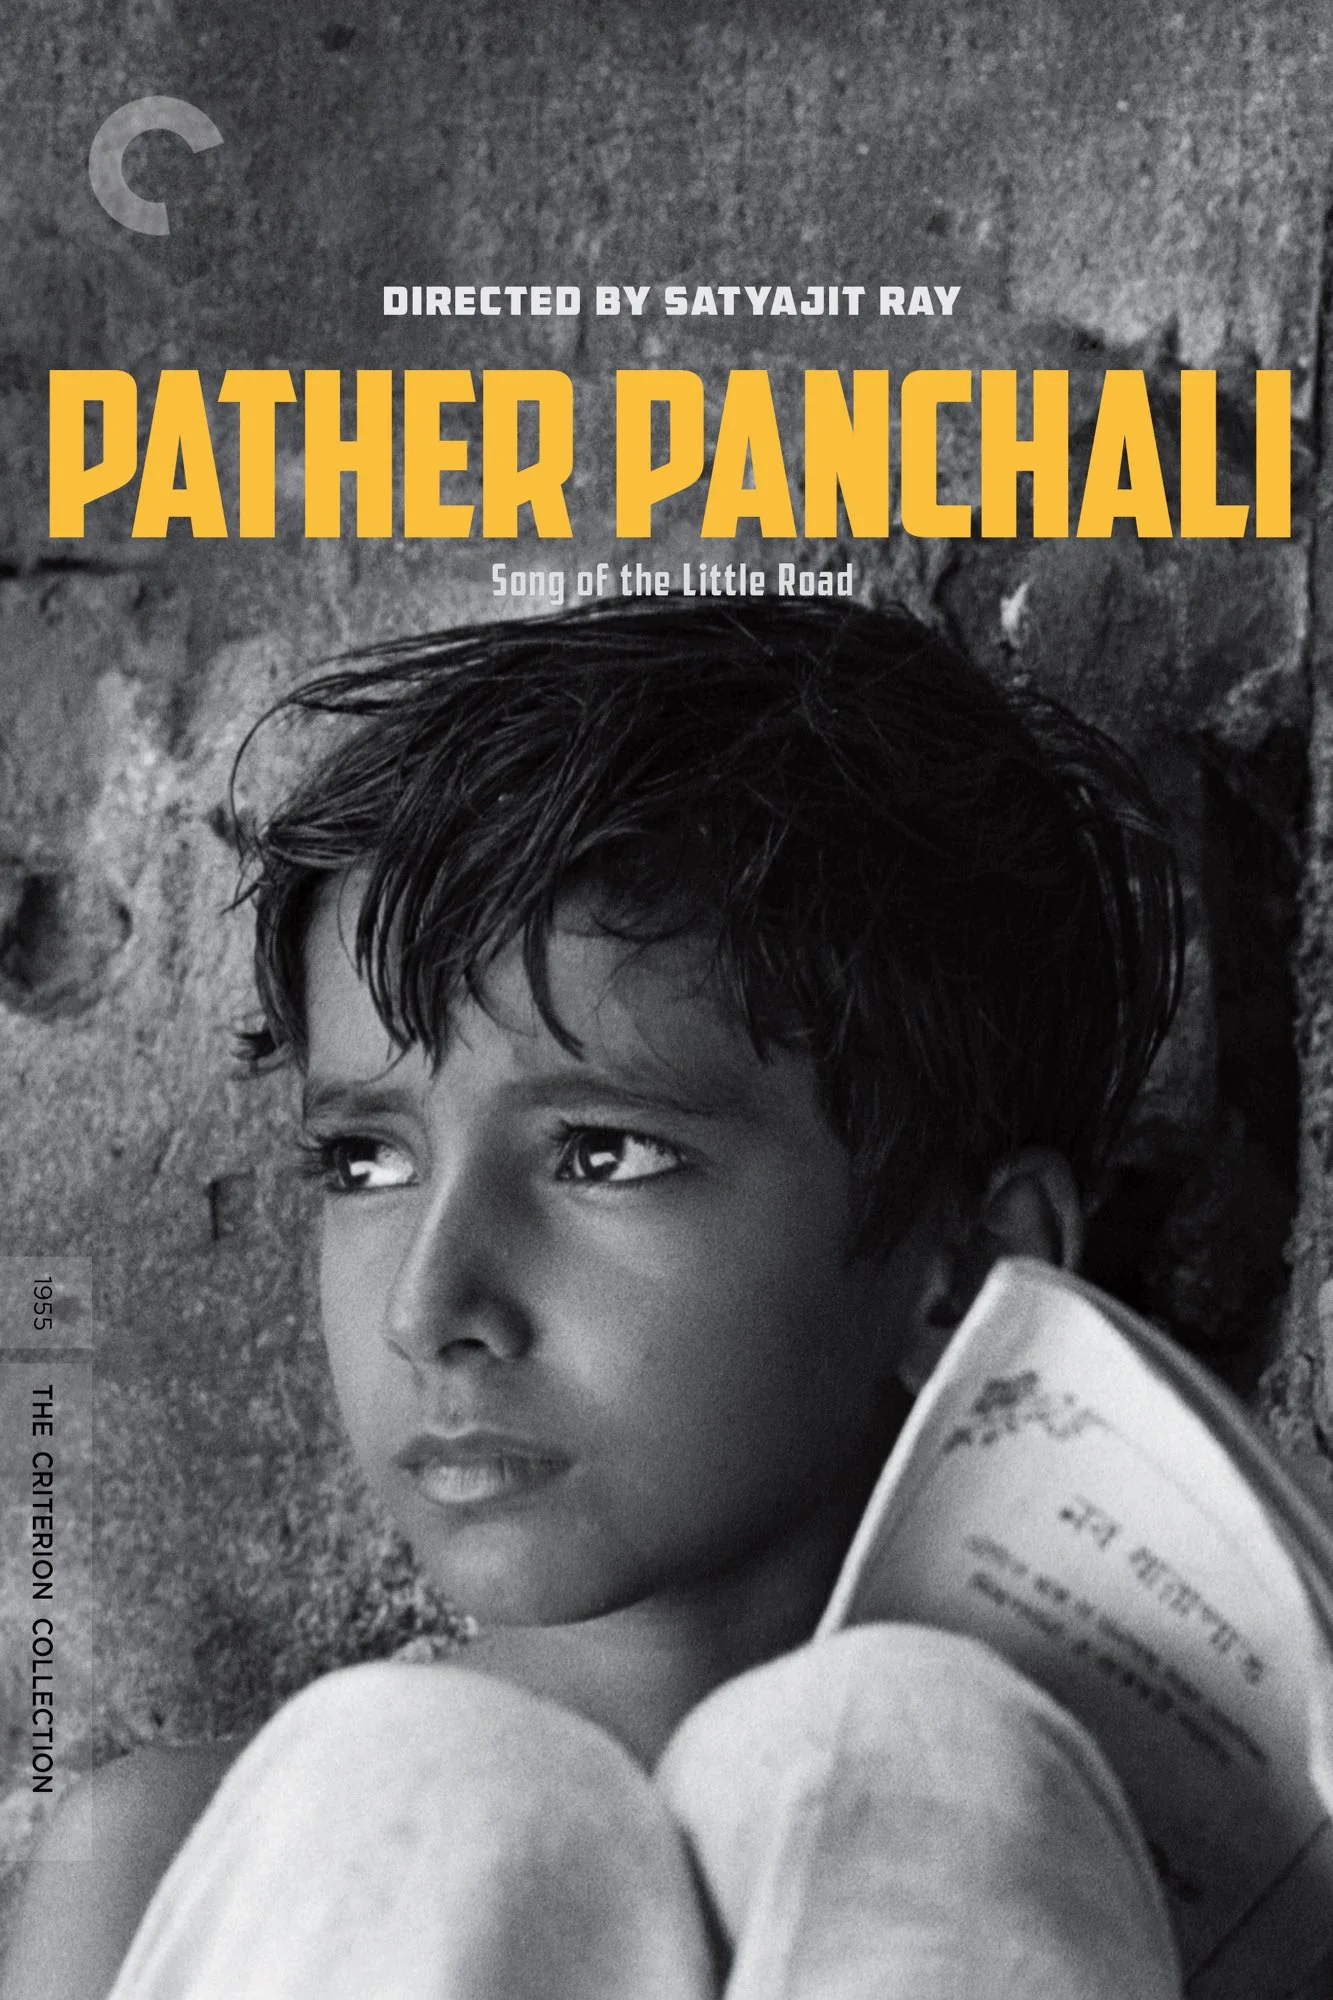 G20 Film Festival to open on Wednesday with Ray’s ‘Pather Panchali’: ستیہ جیت رے کی ‘پاتھر پنچالی’ کے ساتھ ہوگا جی 20 فلم فیسٹیول کا آغاز